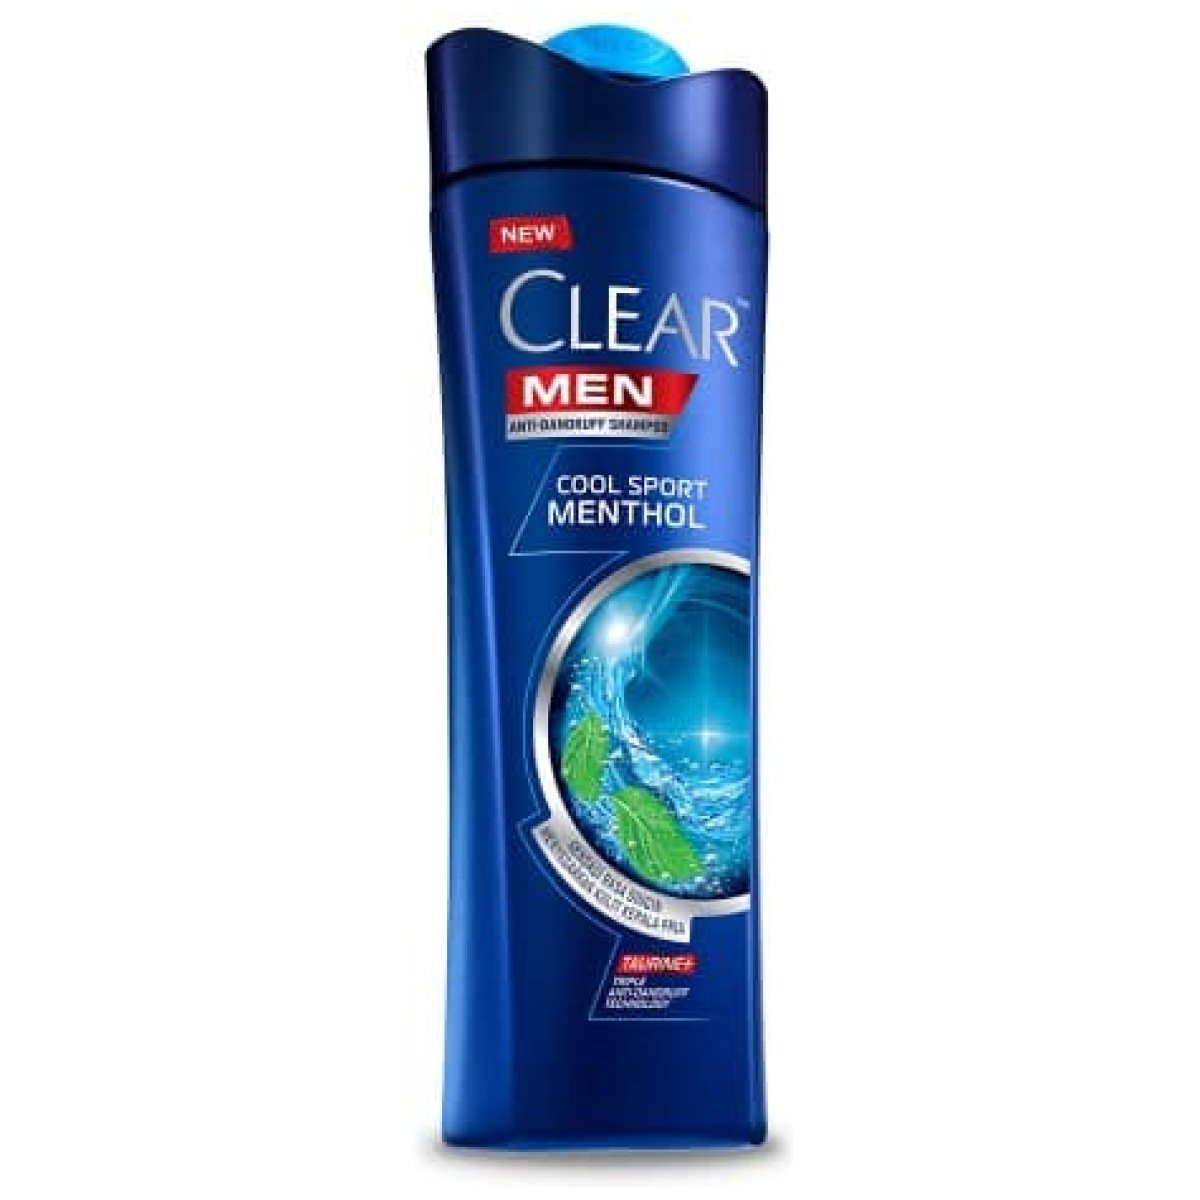 Clear Men Shampoo Cool Sport Methol 320ml